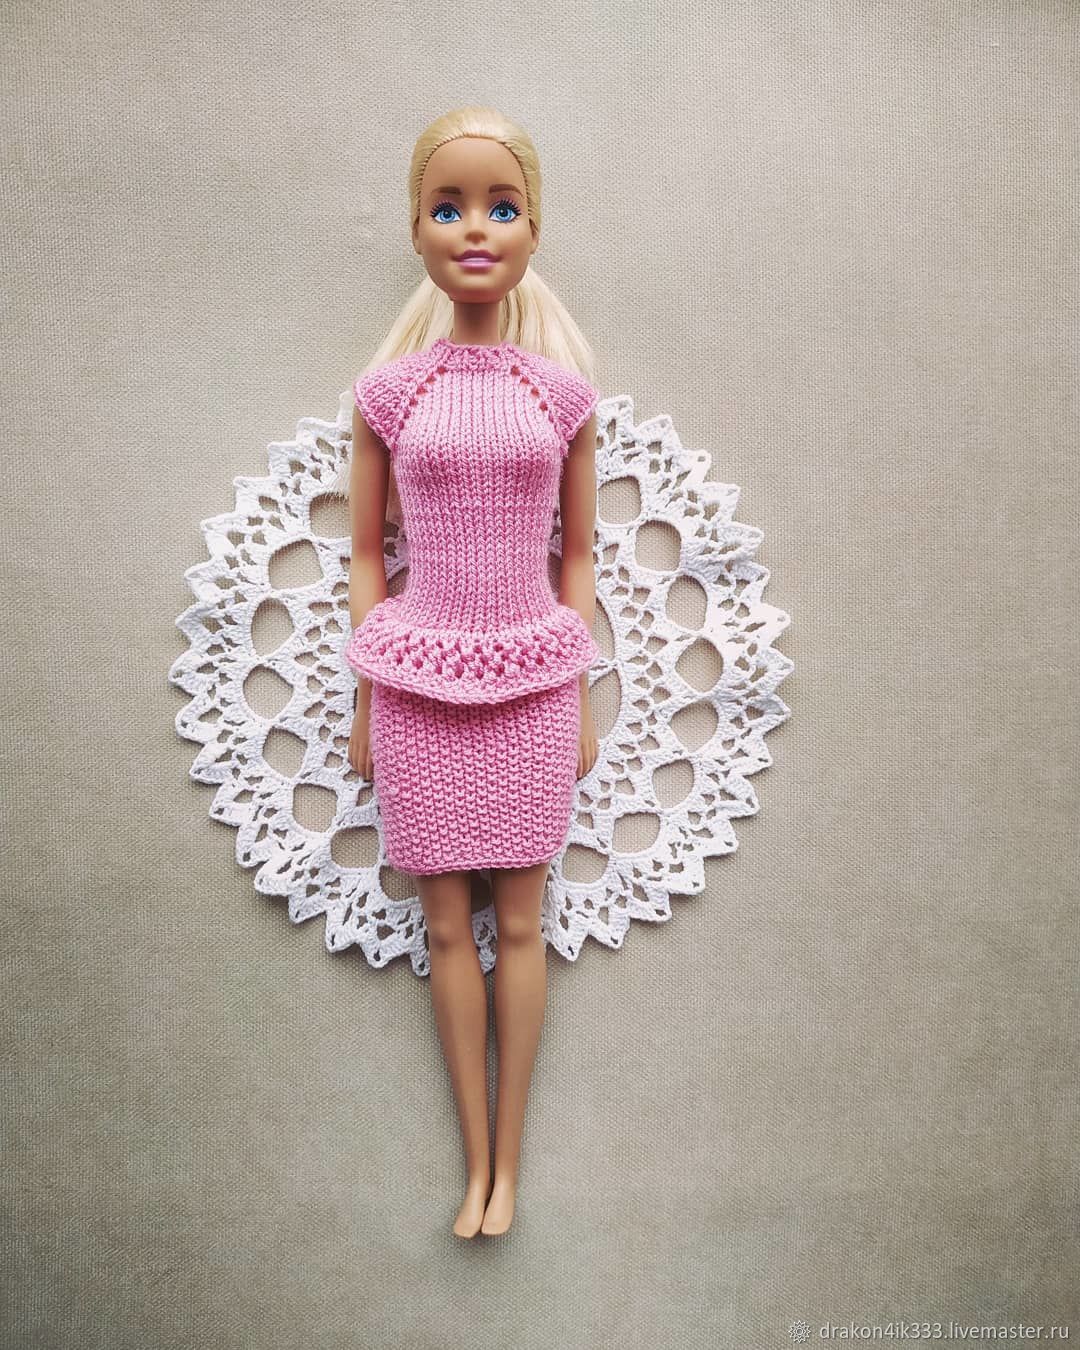 Мастер-класс (фото мк) по вязанию платья для куклы Барби (Barbie) спицами. | Люськлюзив | Дзен